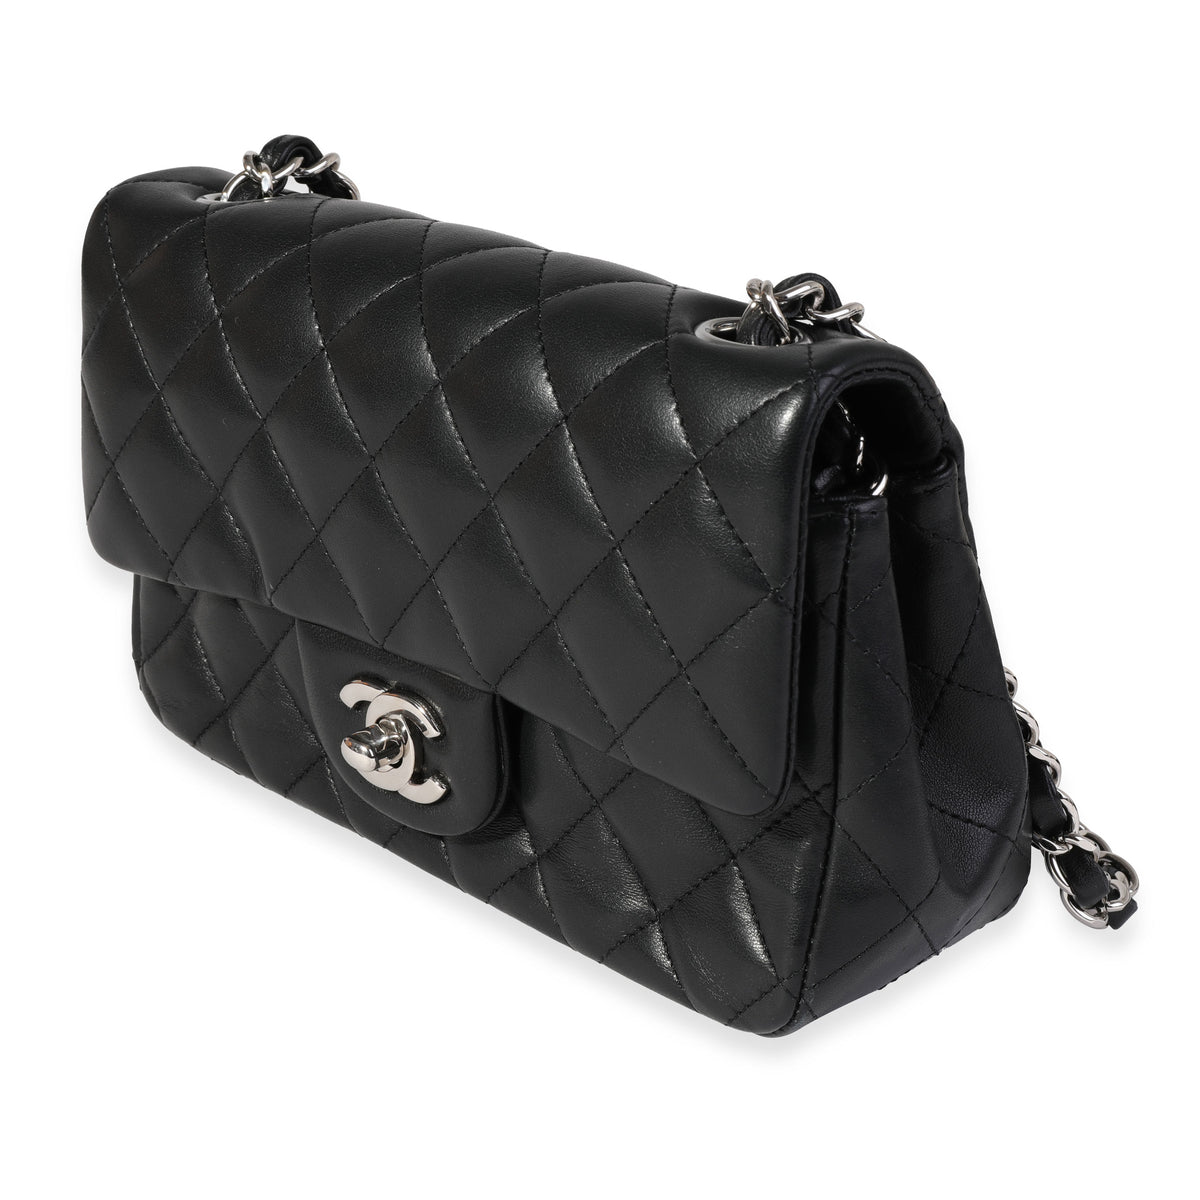 Chanel Black Quilted Lambskin Classic Mini Rectangular Flap Bag